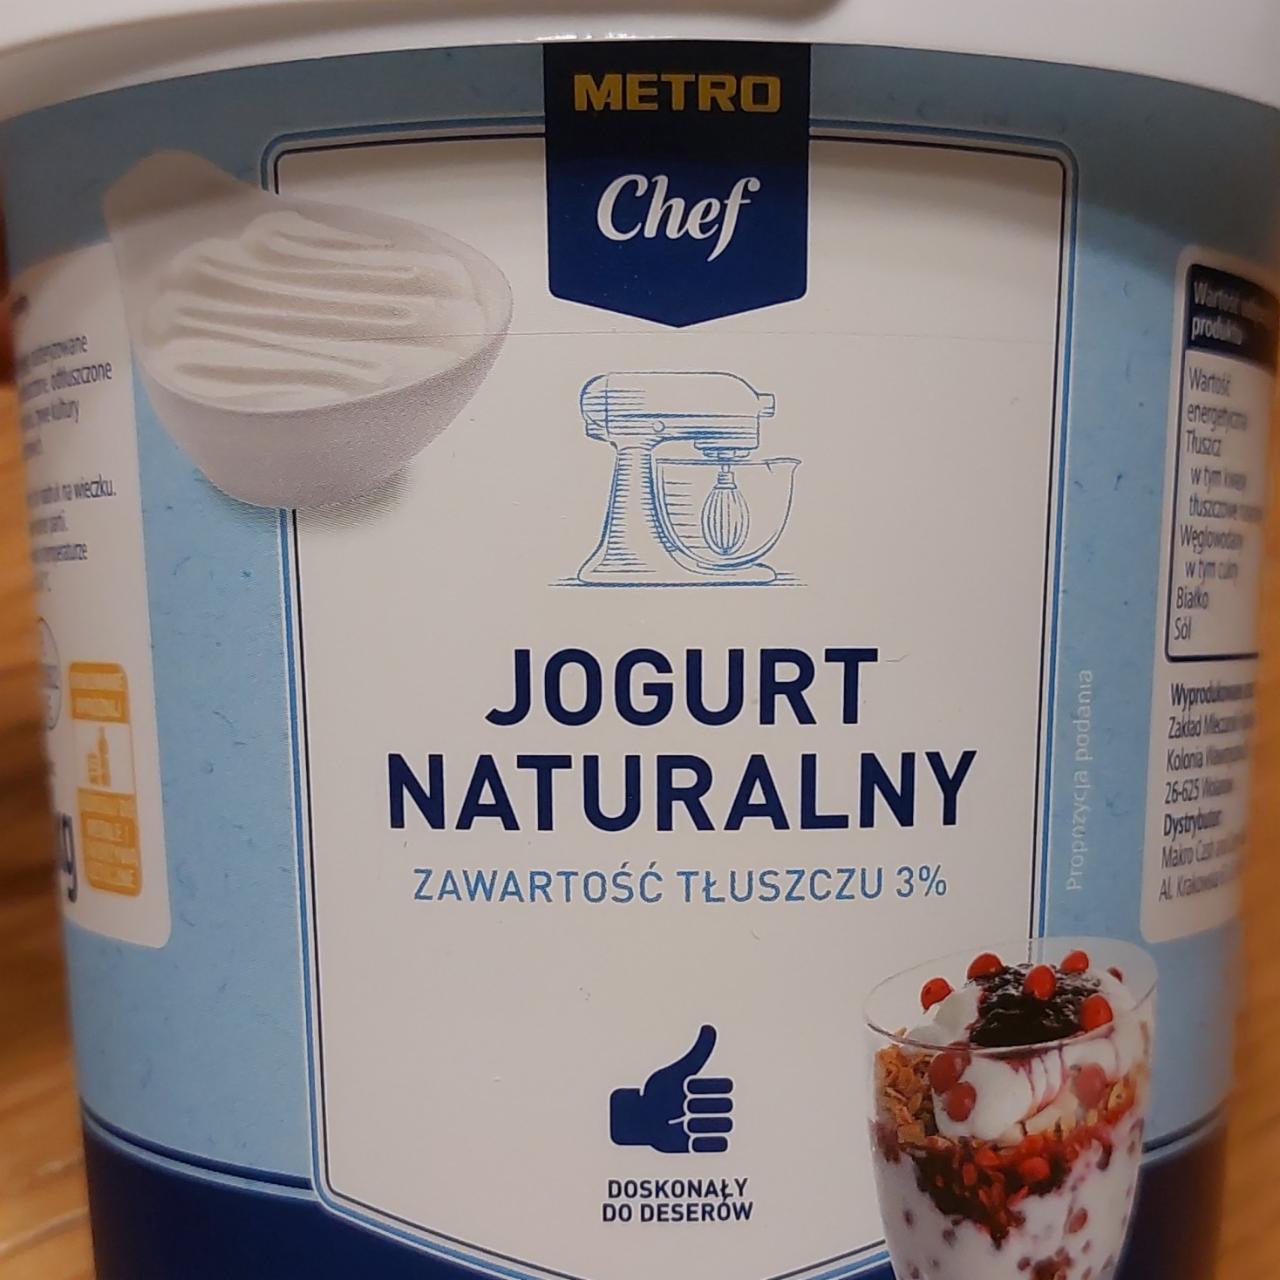 Фото - Yogurt naturalny 3% Metro Chef